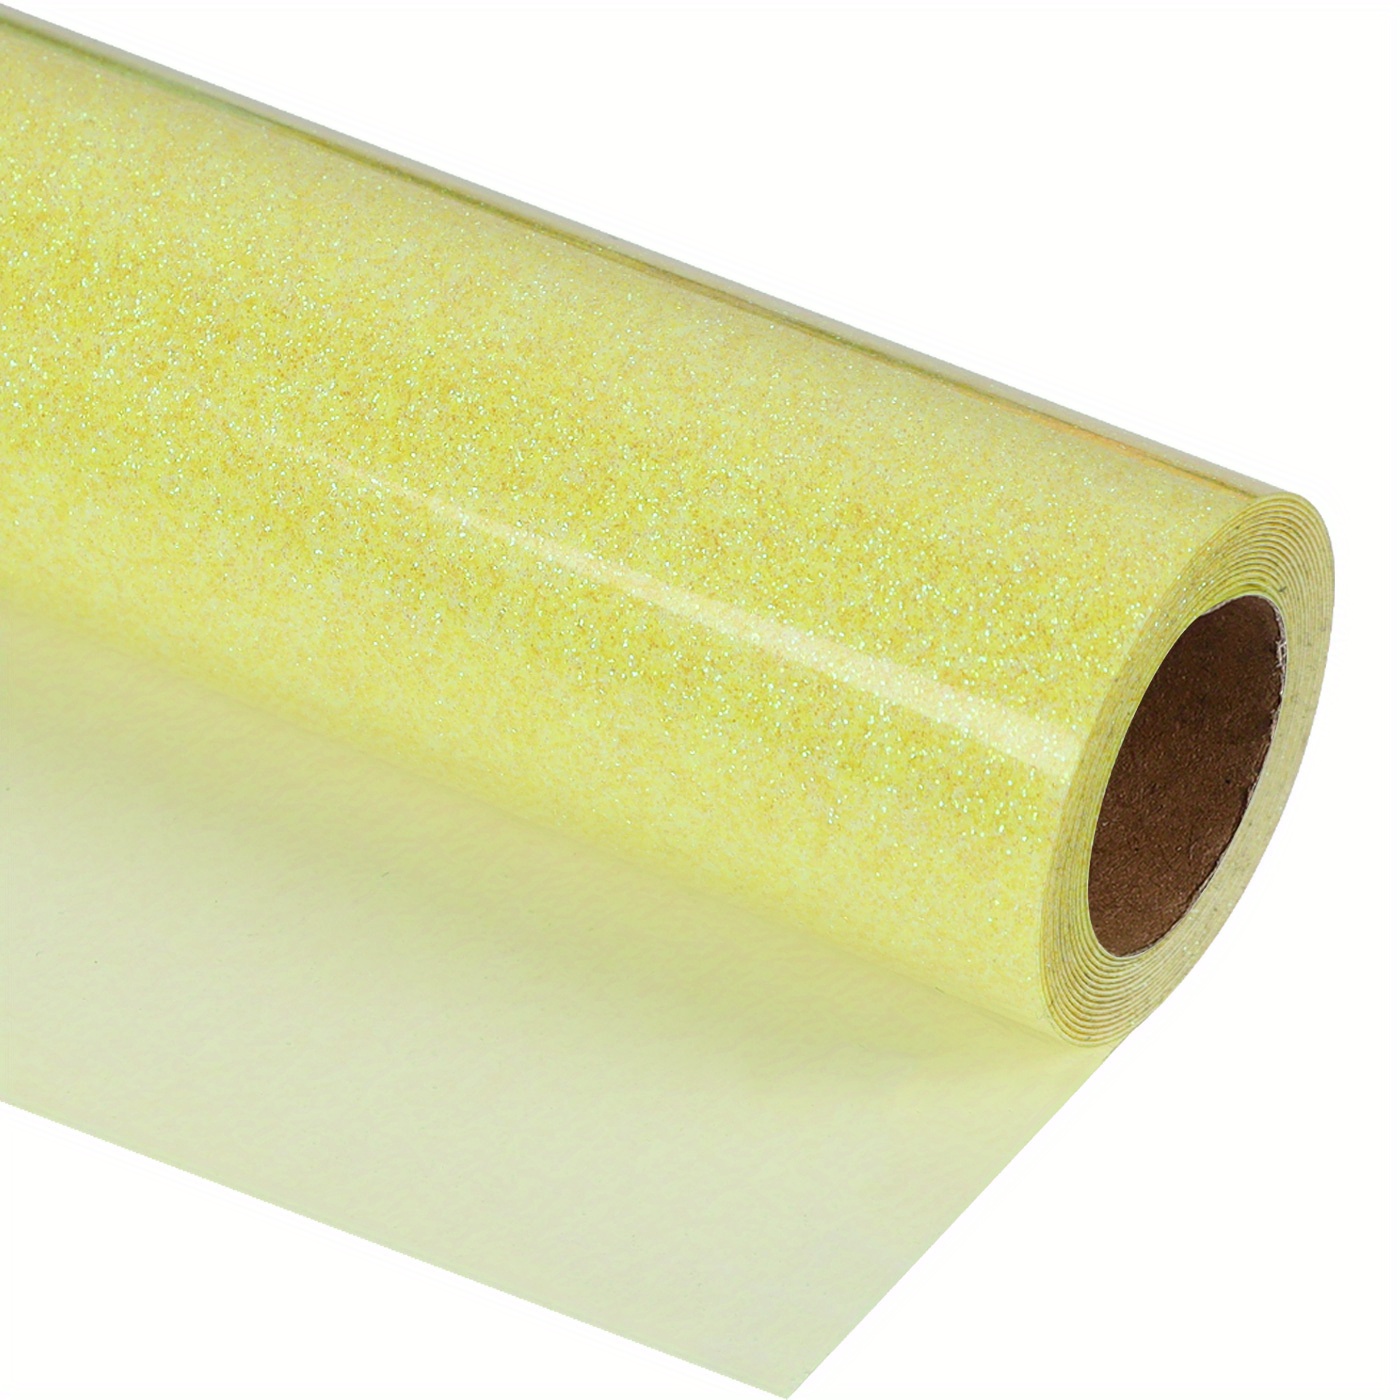 Yellow Glitter Vinyl Rolls for Cricut, Silhouette, 6 Feet